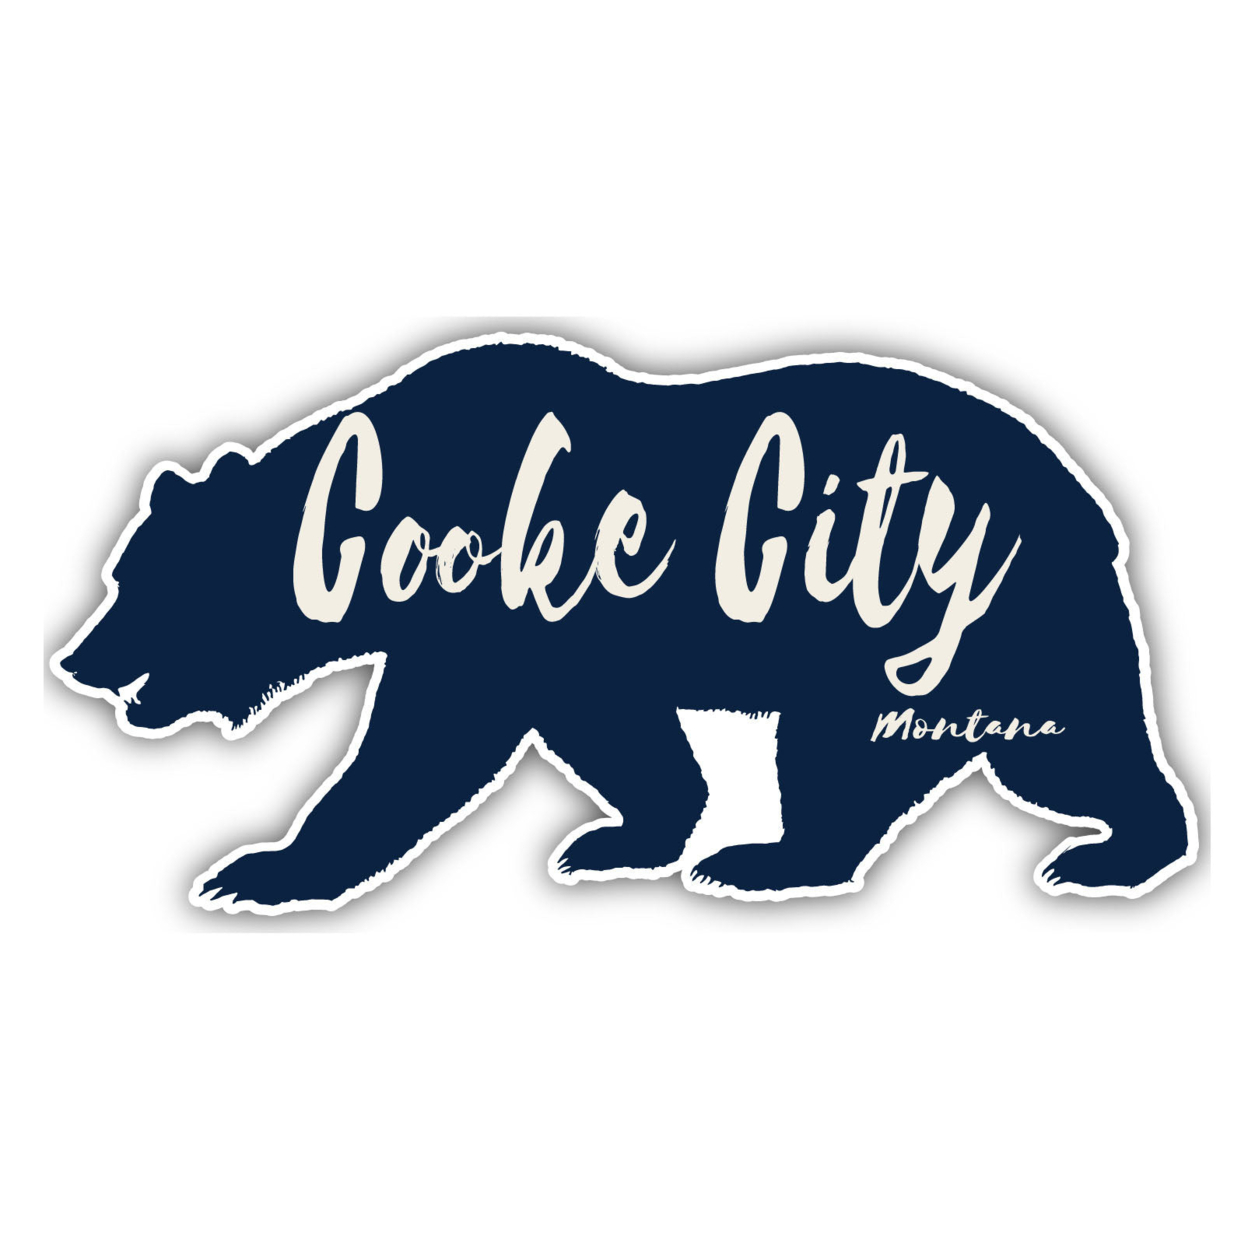 Cooke City Montana Souvenir Decorative Stickers (Choose Theme And Size) - Single Unit, 6-Inch, Bear